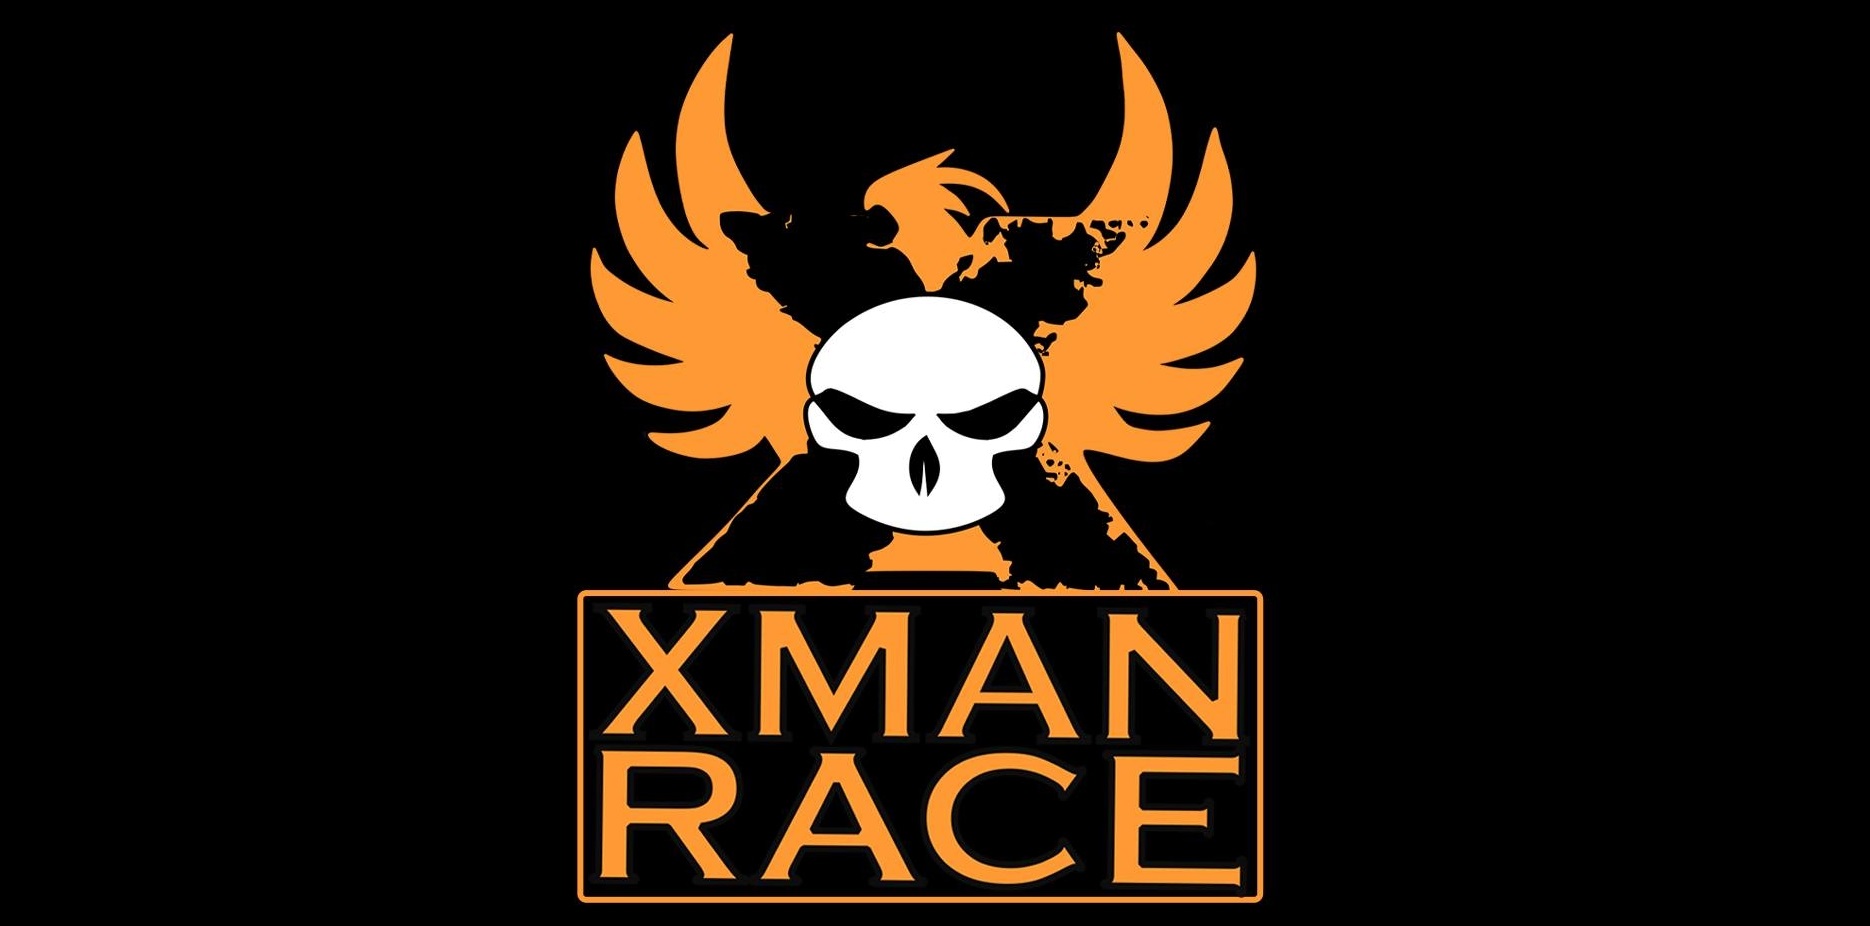 XMAN Race